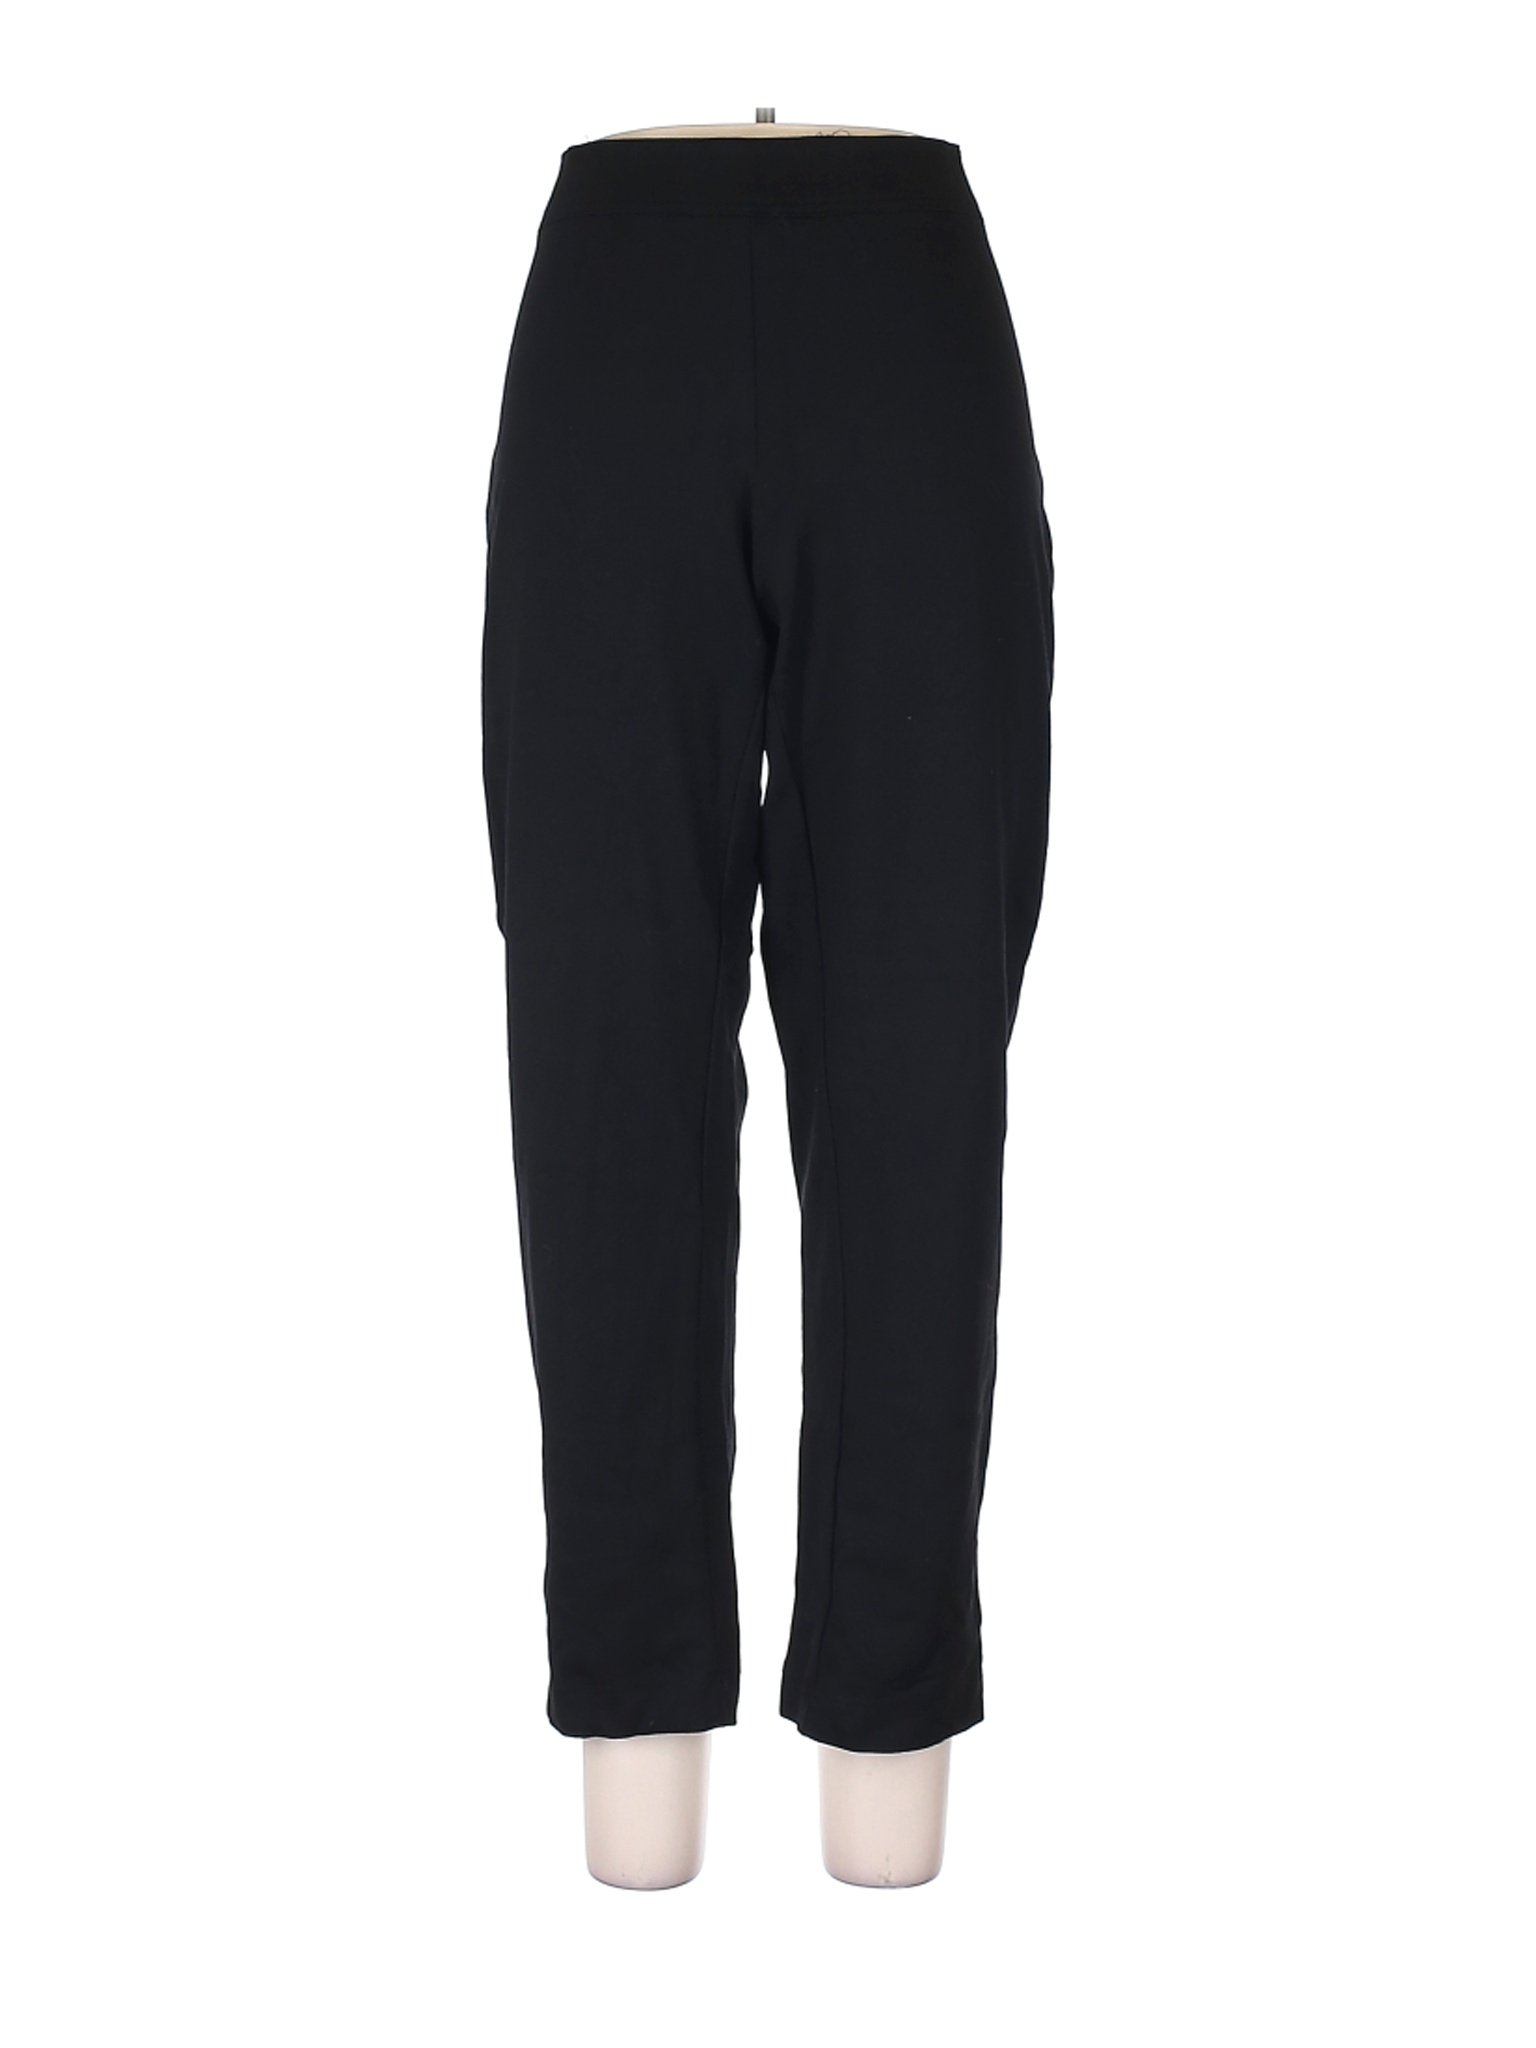 Premise Studio Women Black Casual Pants 0X Plus | eBay